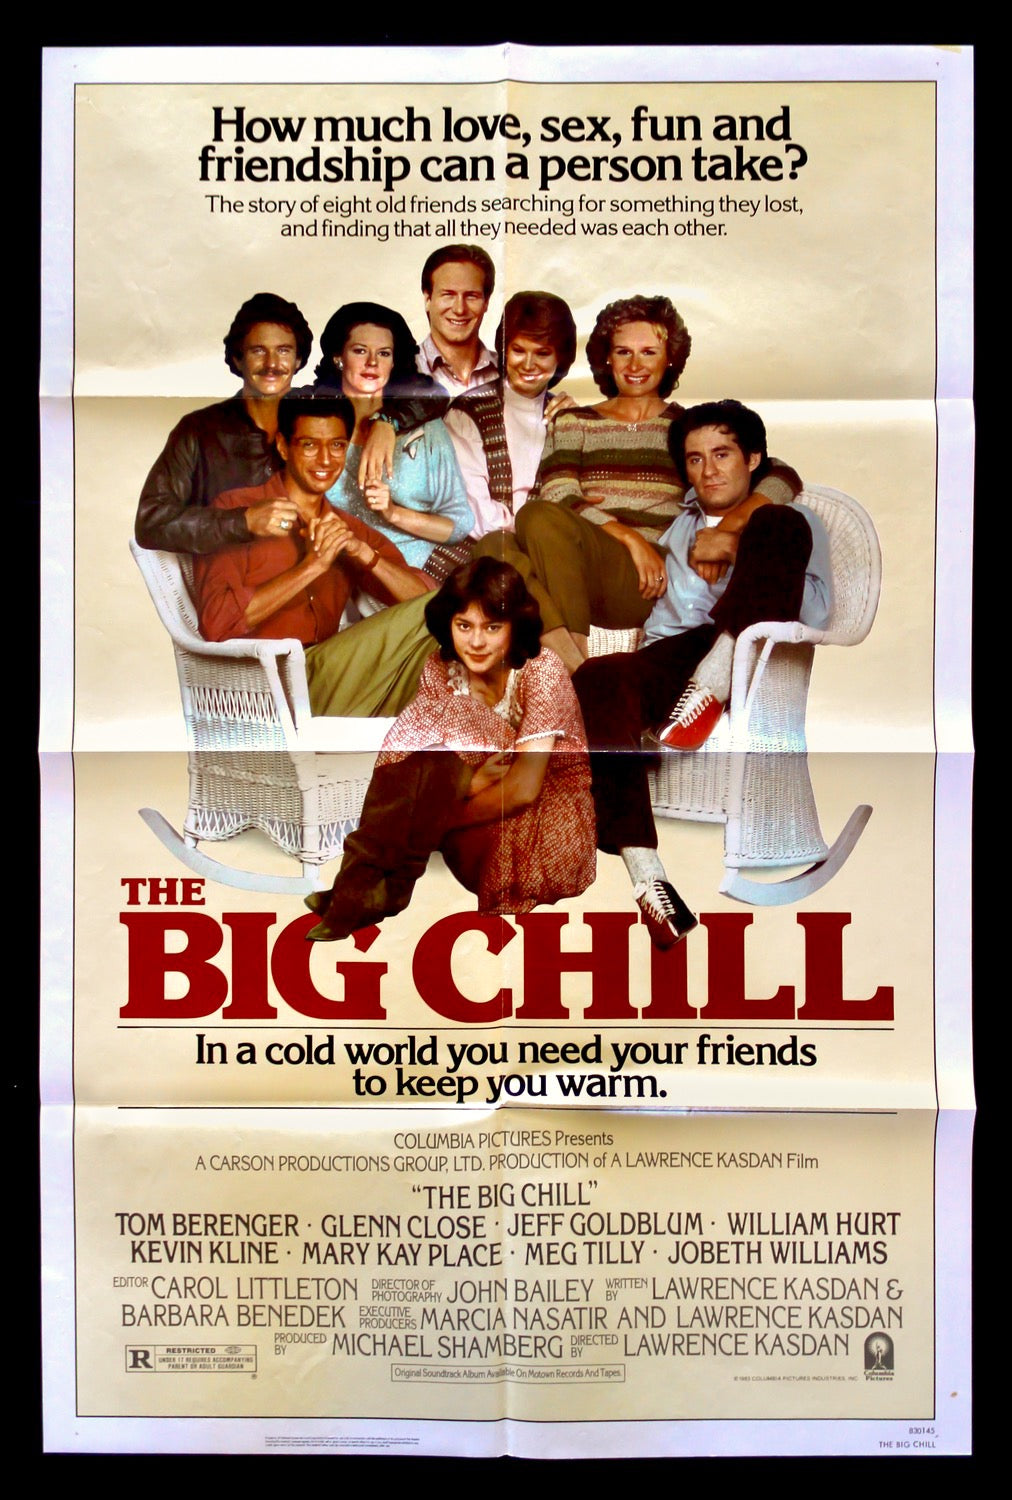 Big Chill (1983) original movie poster for sale at Original Film Art